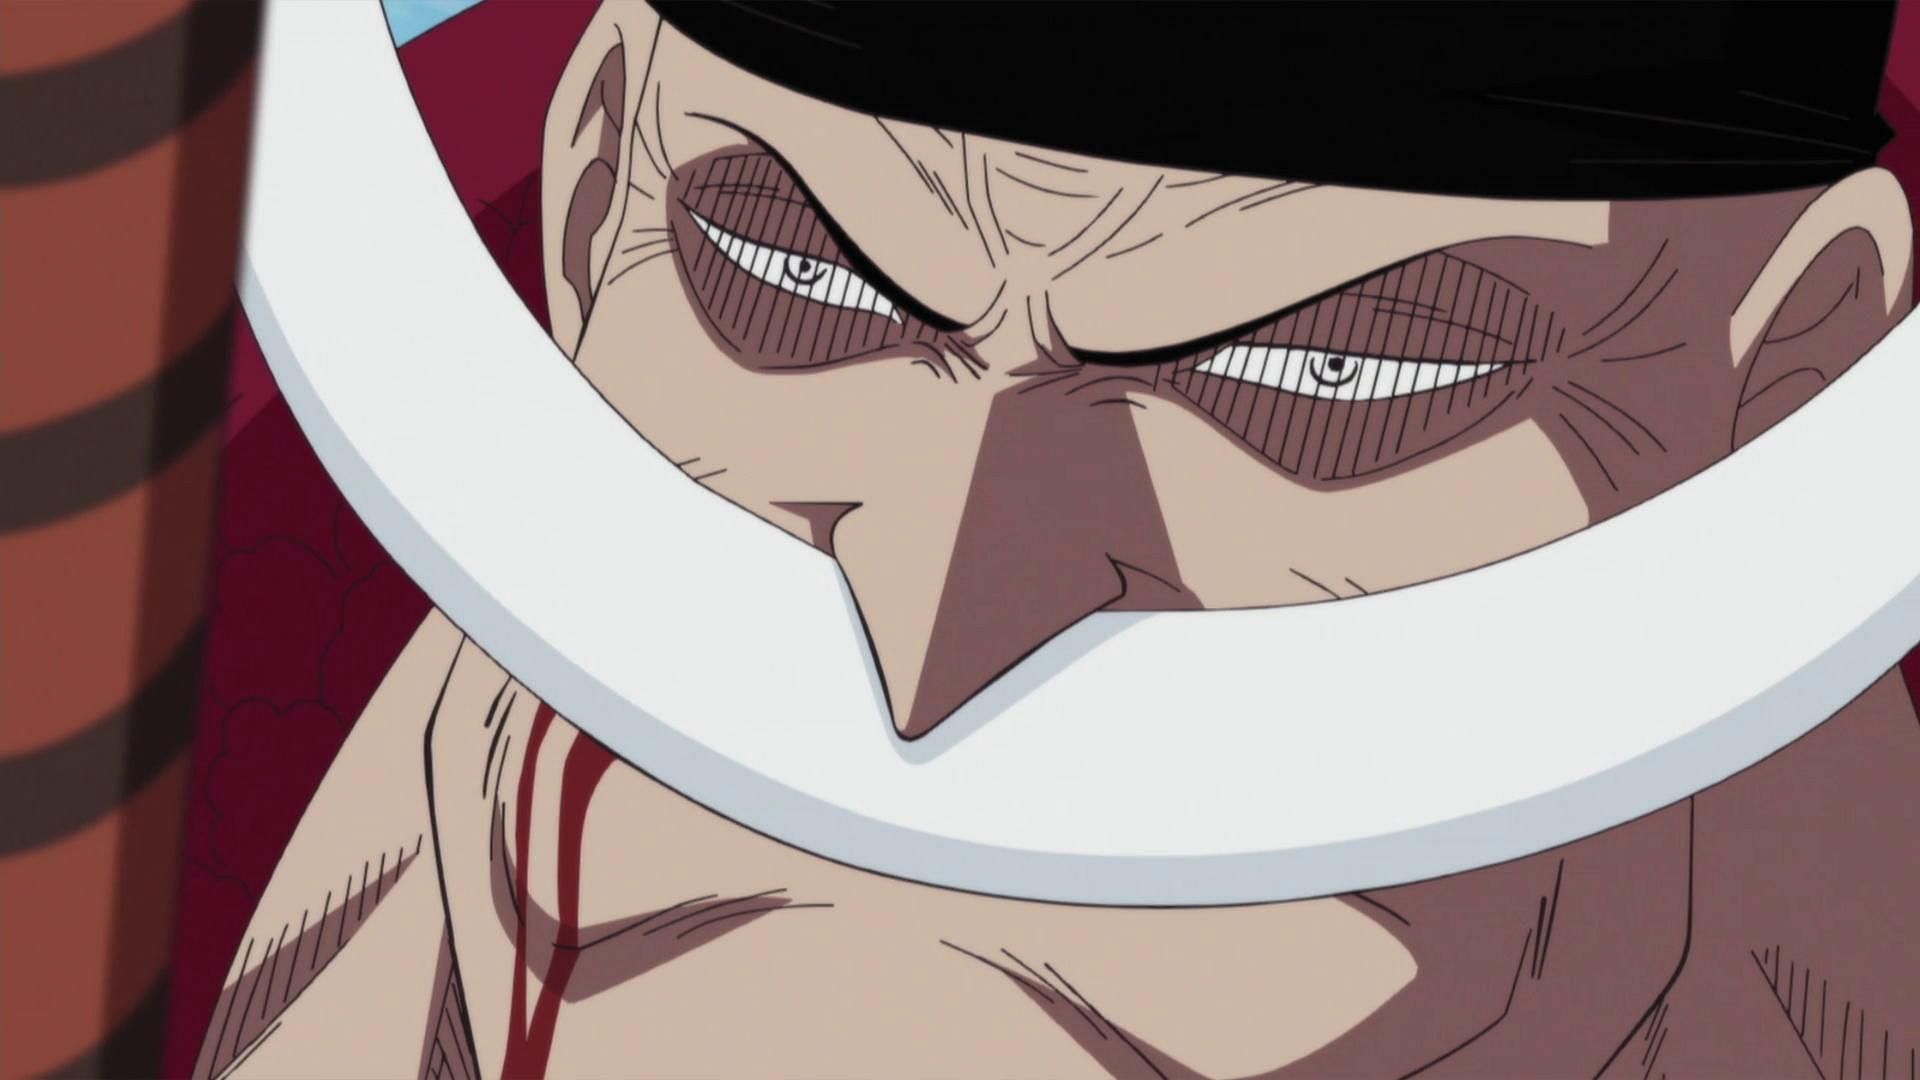 Whitebeard as seen in One Piece (Image via Toei Animation, One Piece)